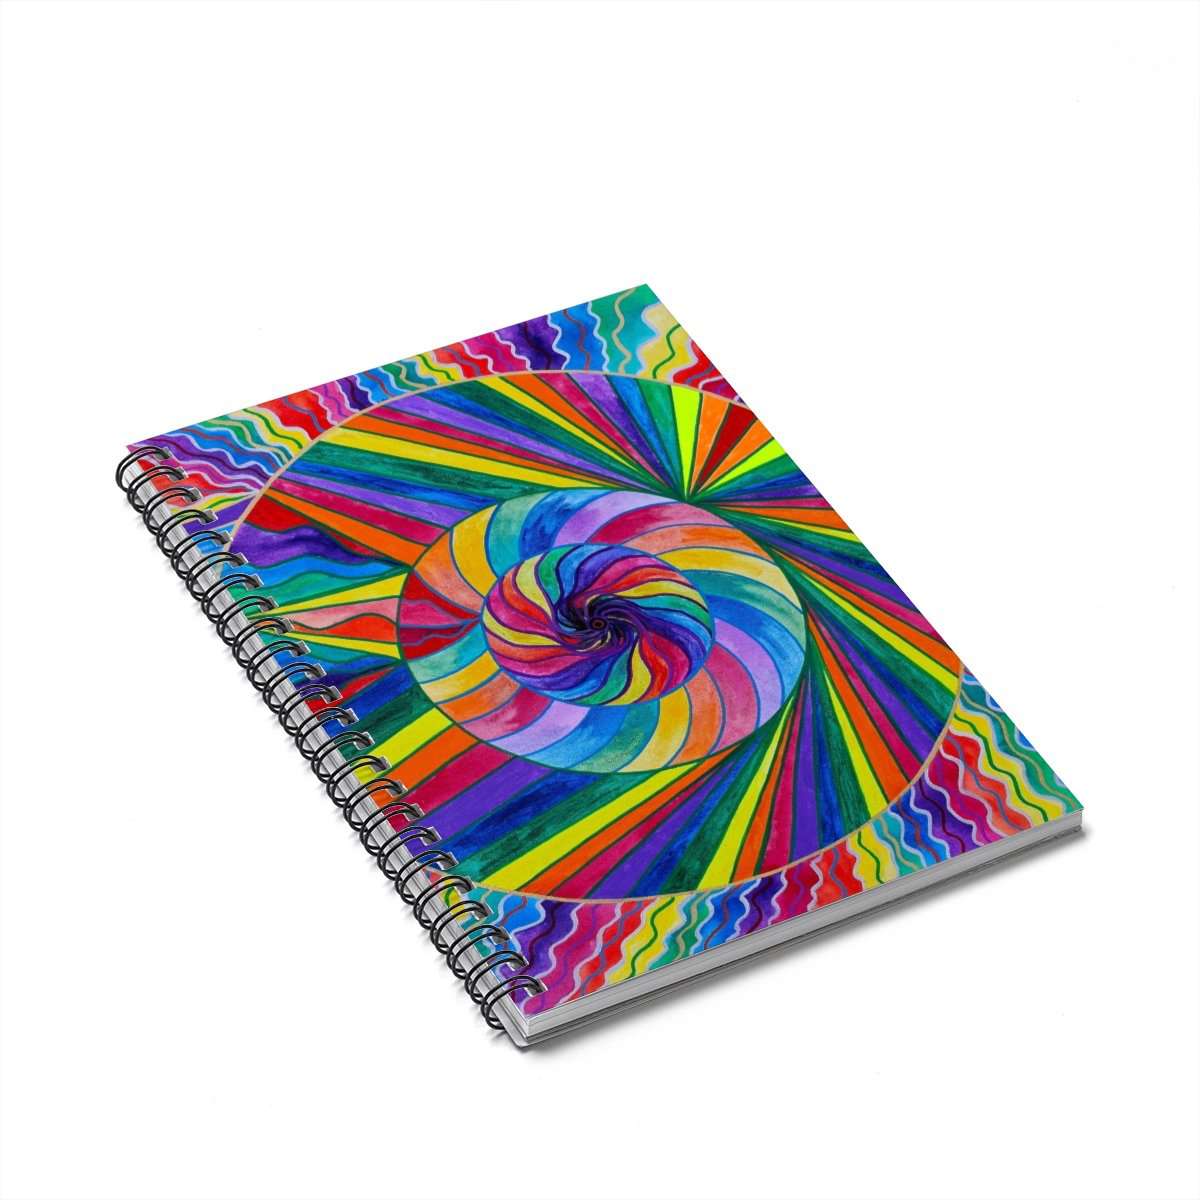 Emerge - Spiral Notebook